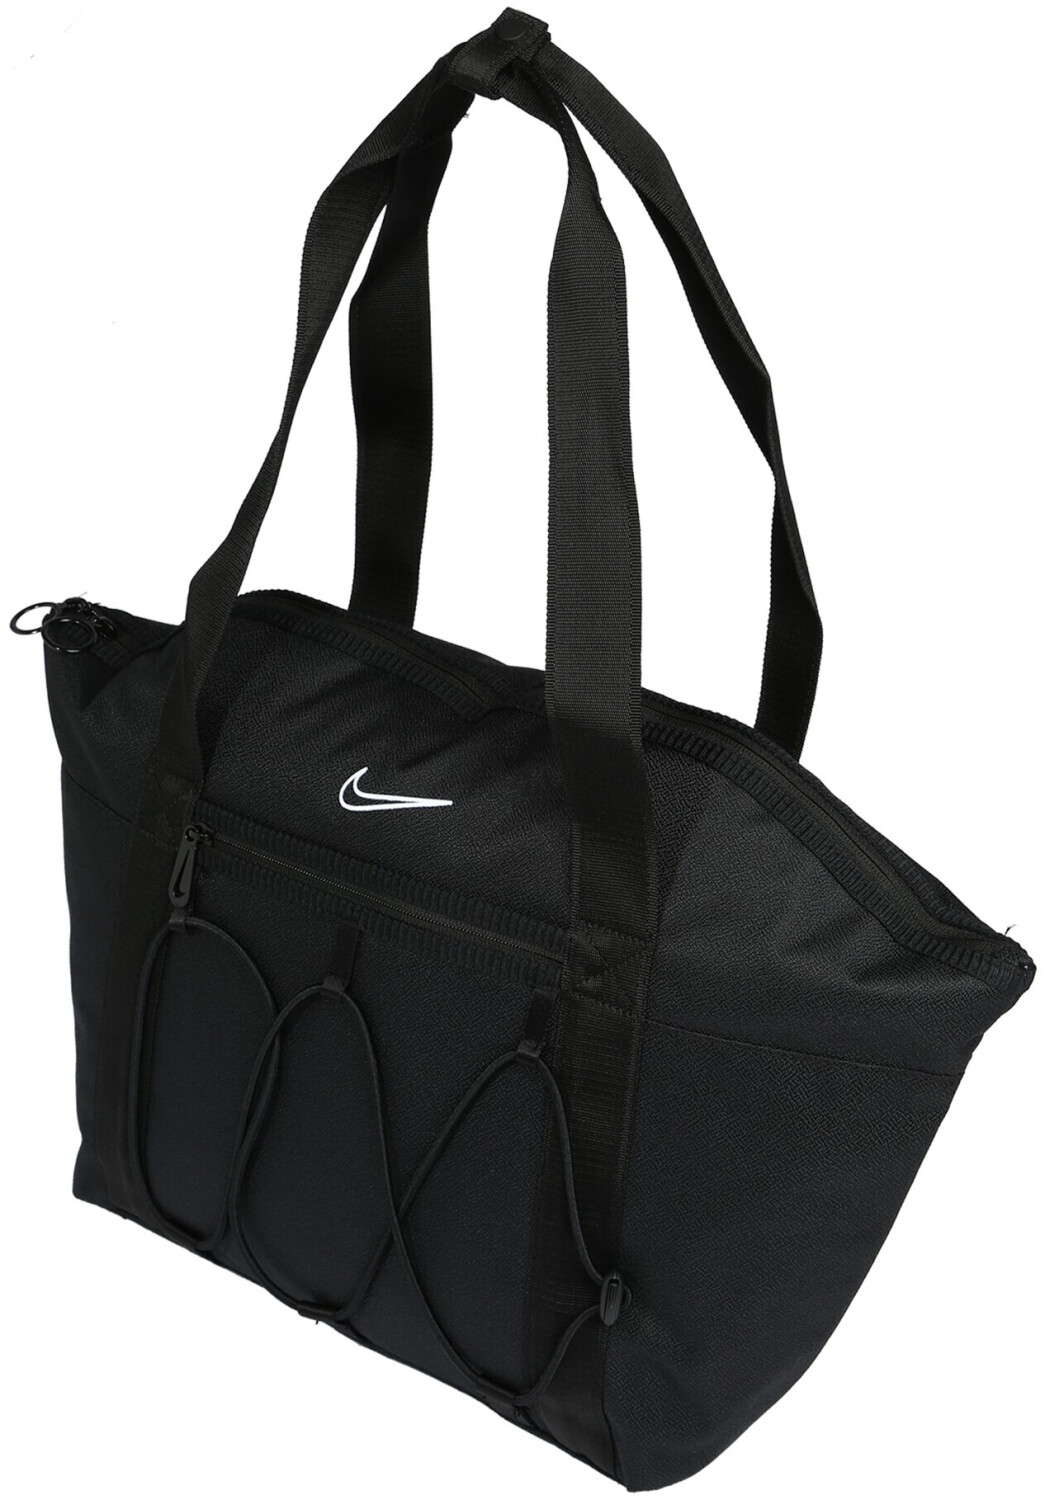 Buy Nike Women's Training Tote Bag Nike One black/white from £33.99 ...